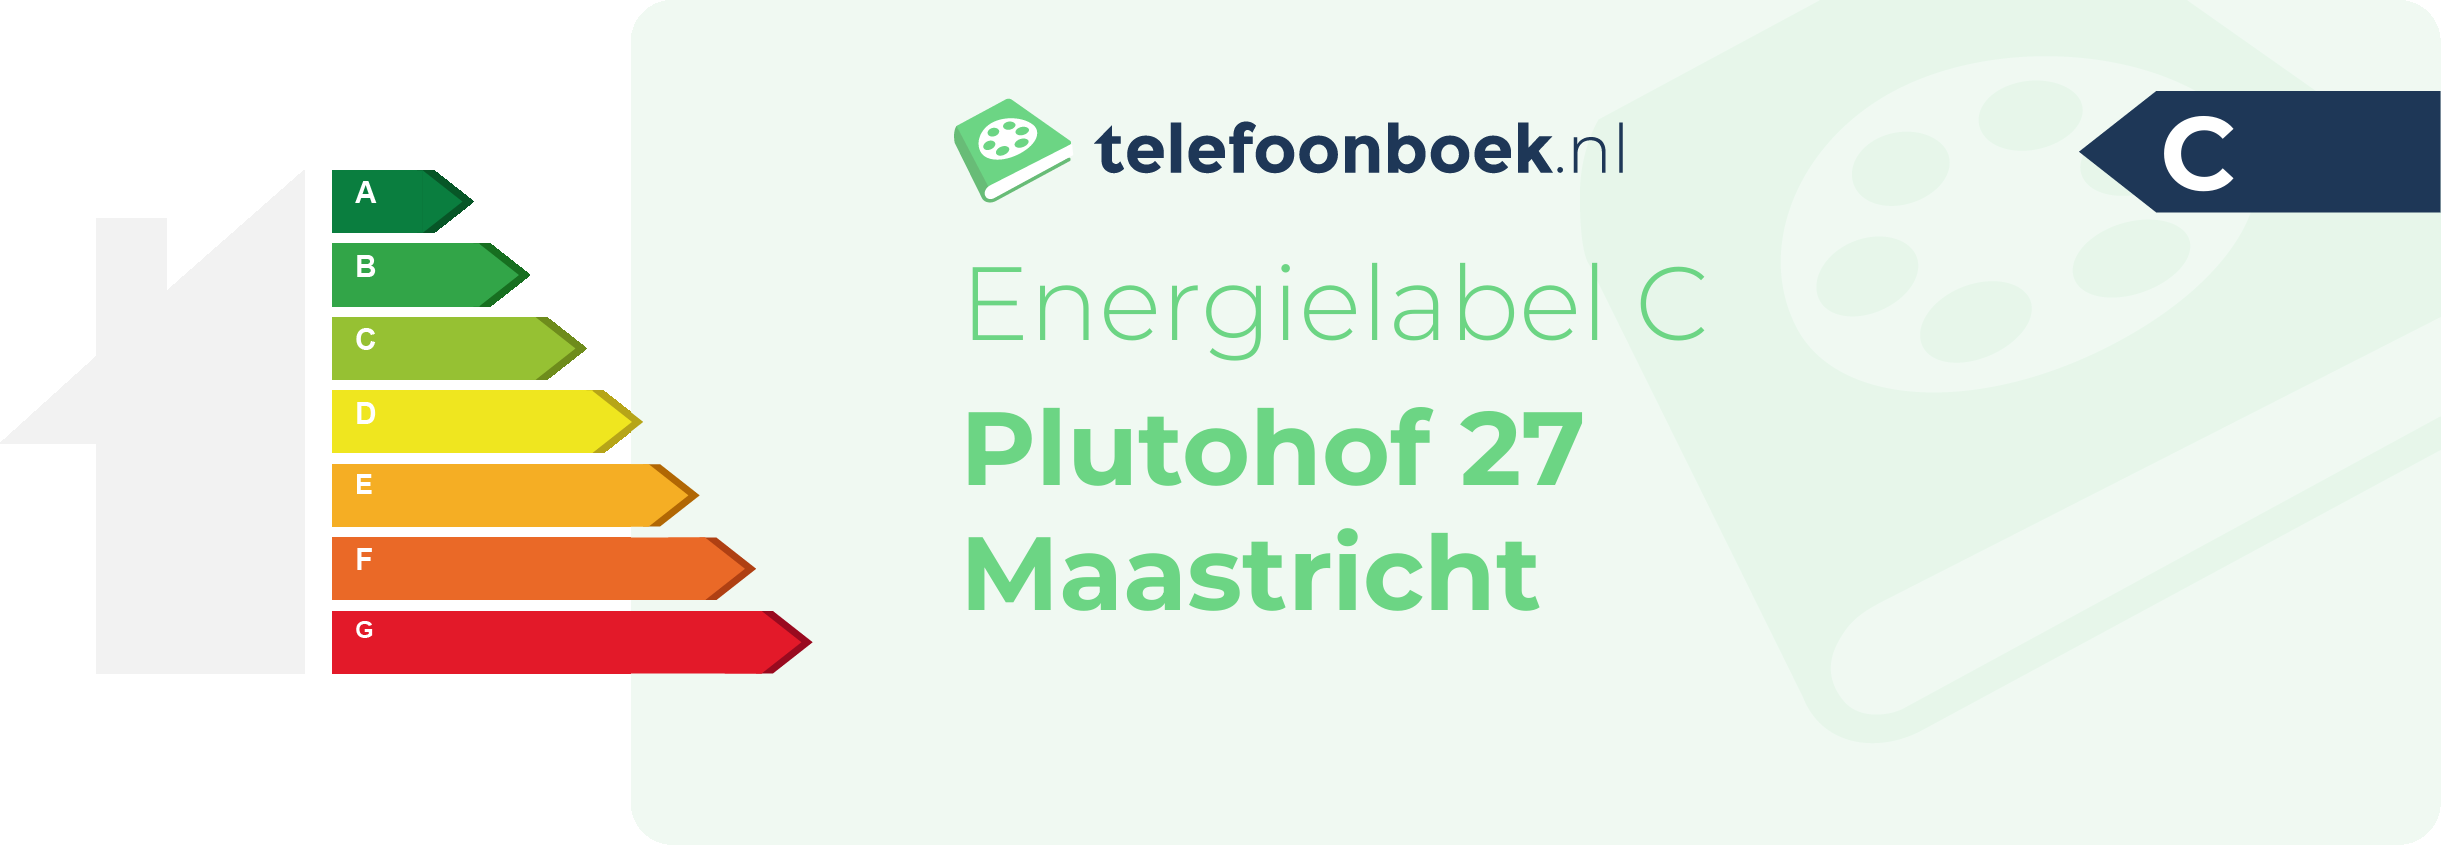 Energielabel Plutohof 27 Maastricht